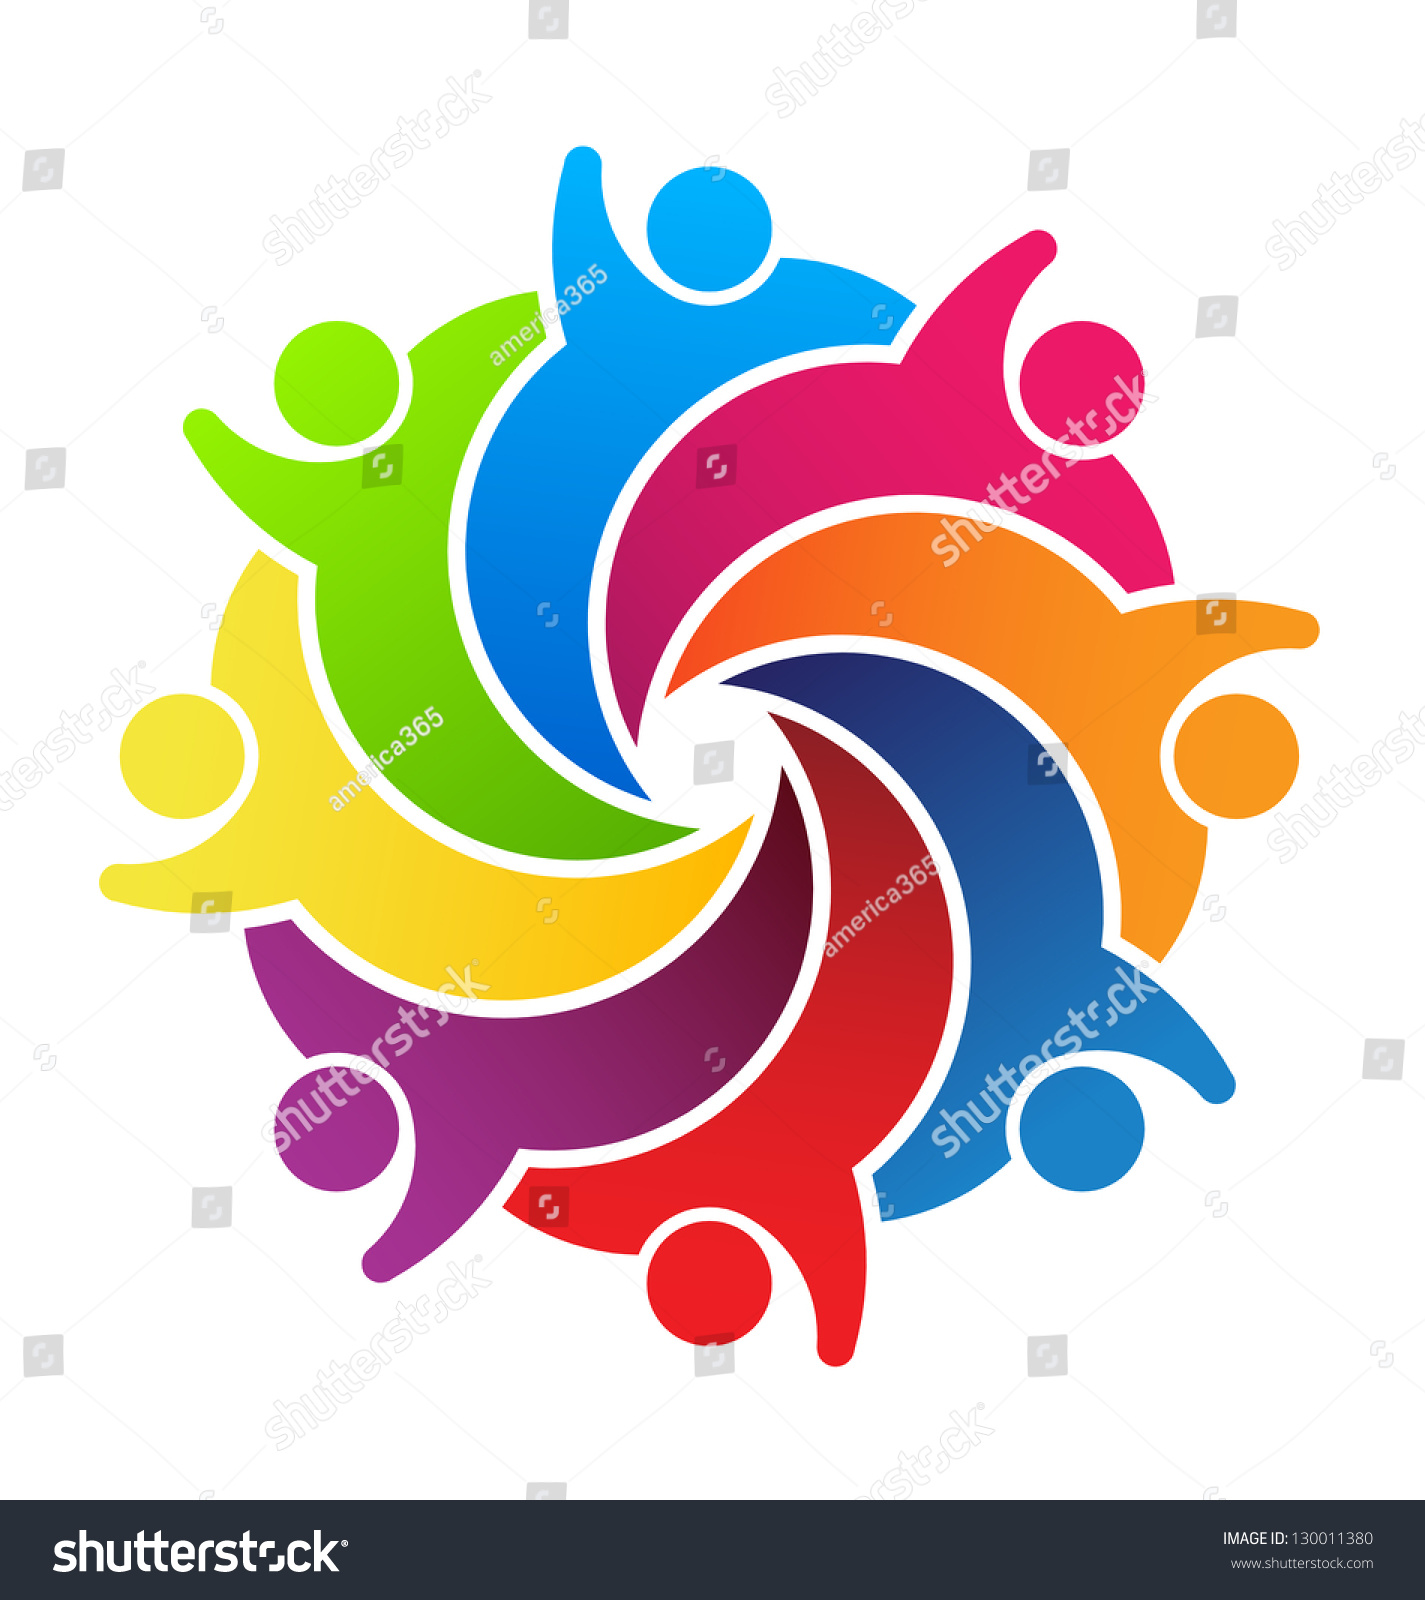 Vector Logo Social Friends. Group 8 People - 130011380 : Shutterstock